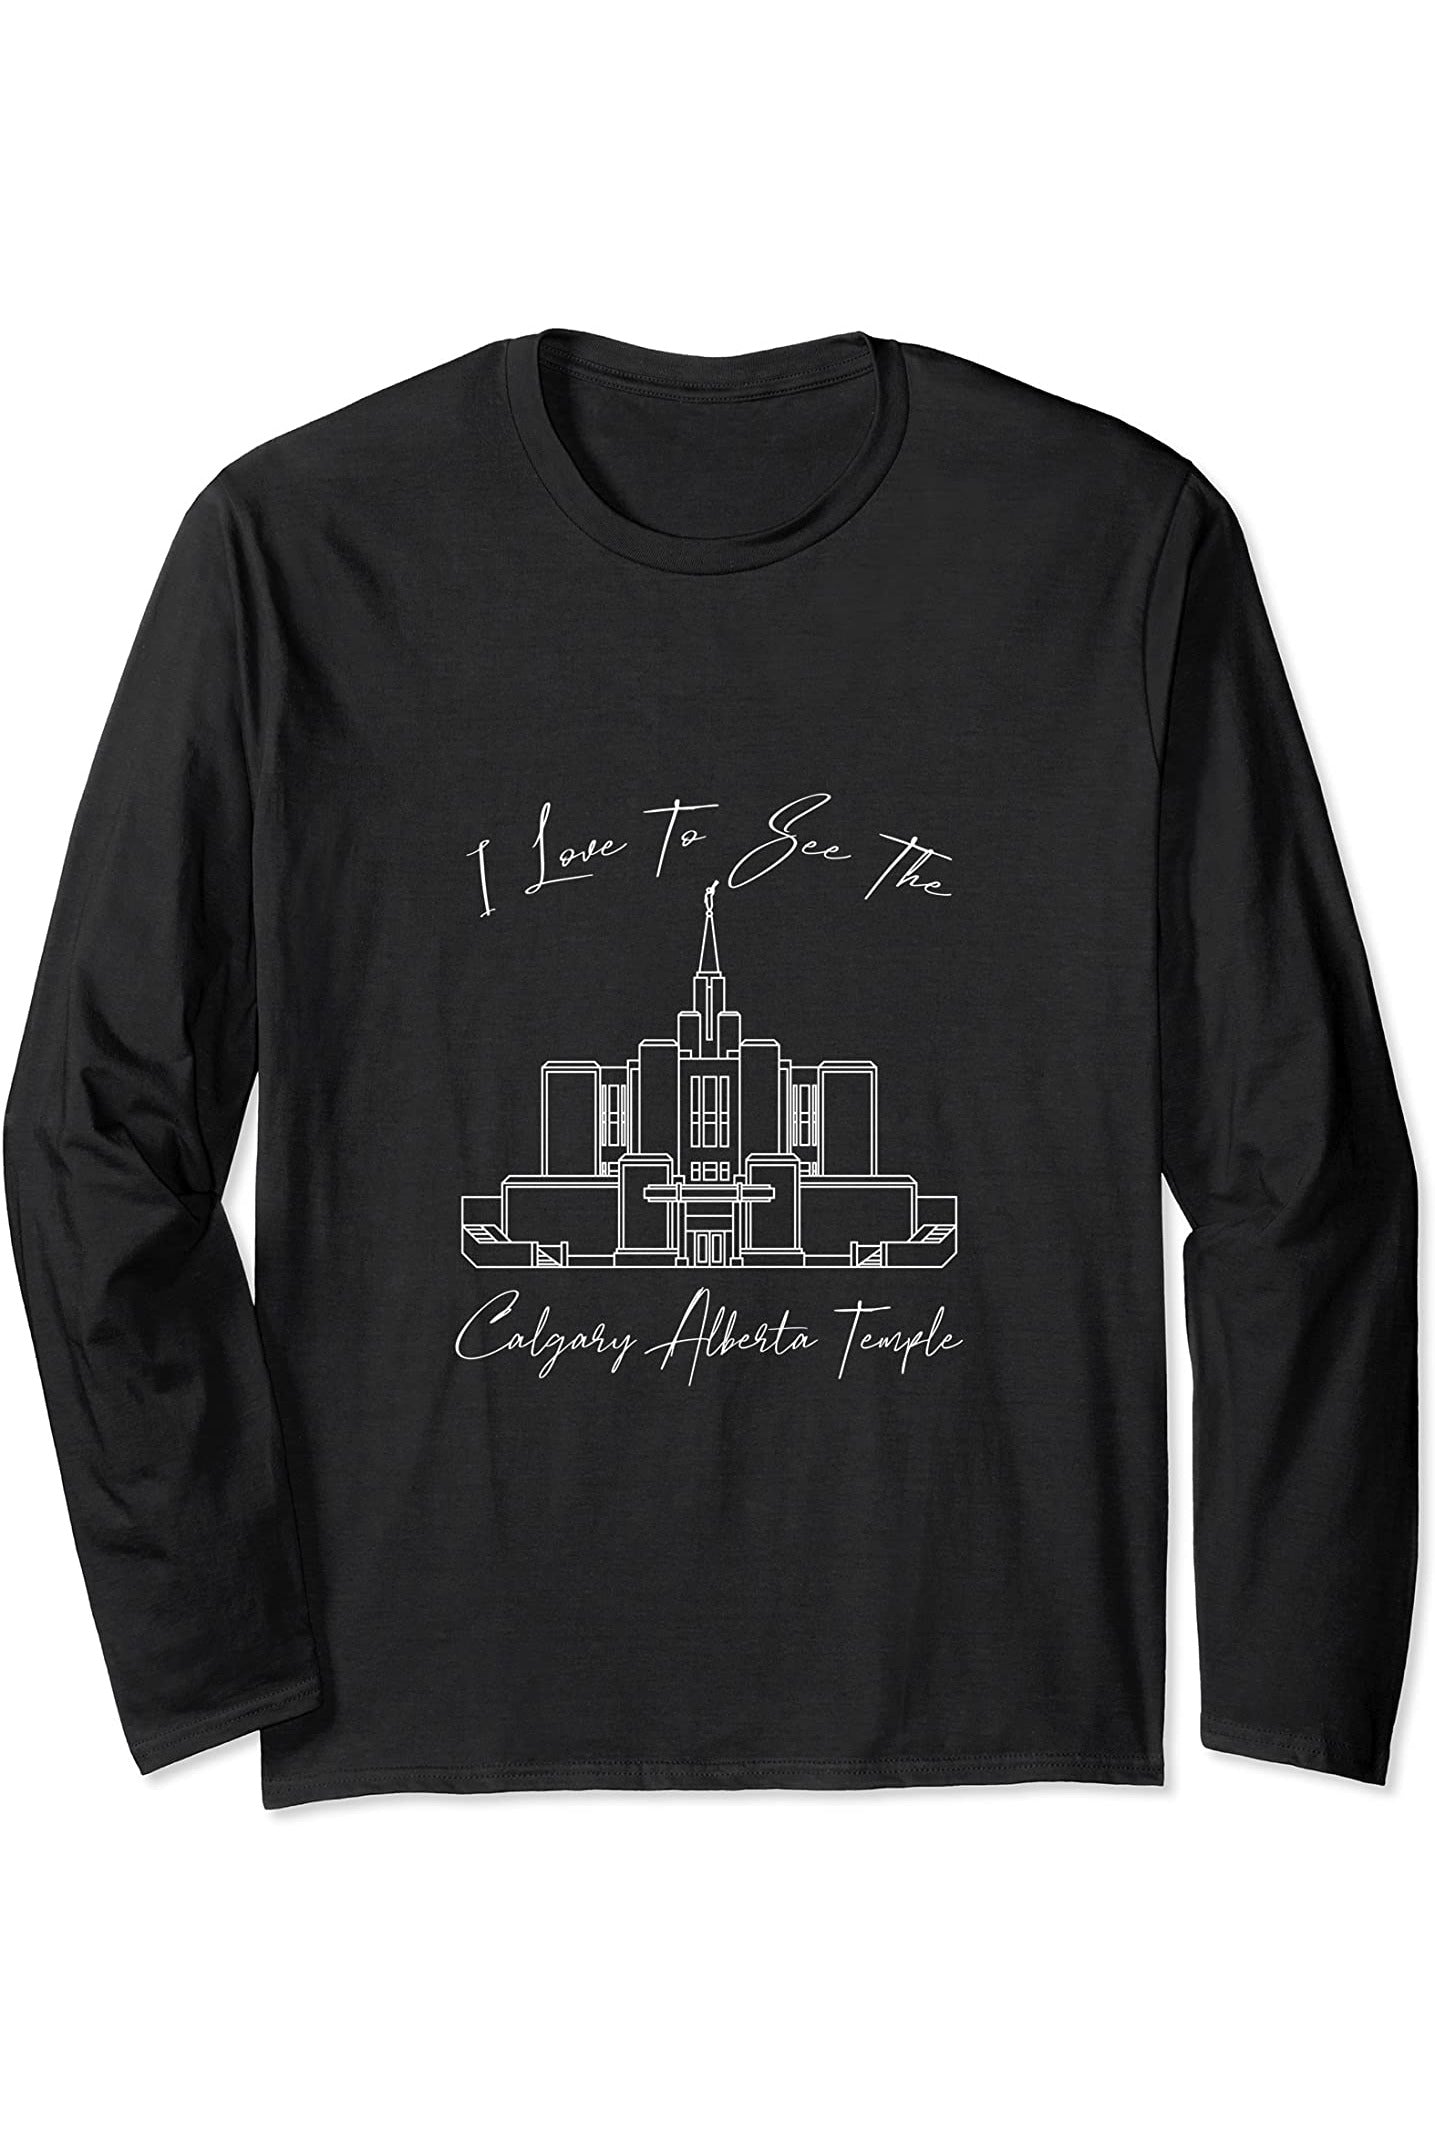 Calgary Alberta Temple Long Sleeve T-Shirt - Calligraphy Style (English) US